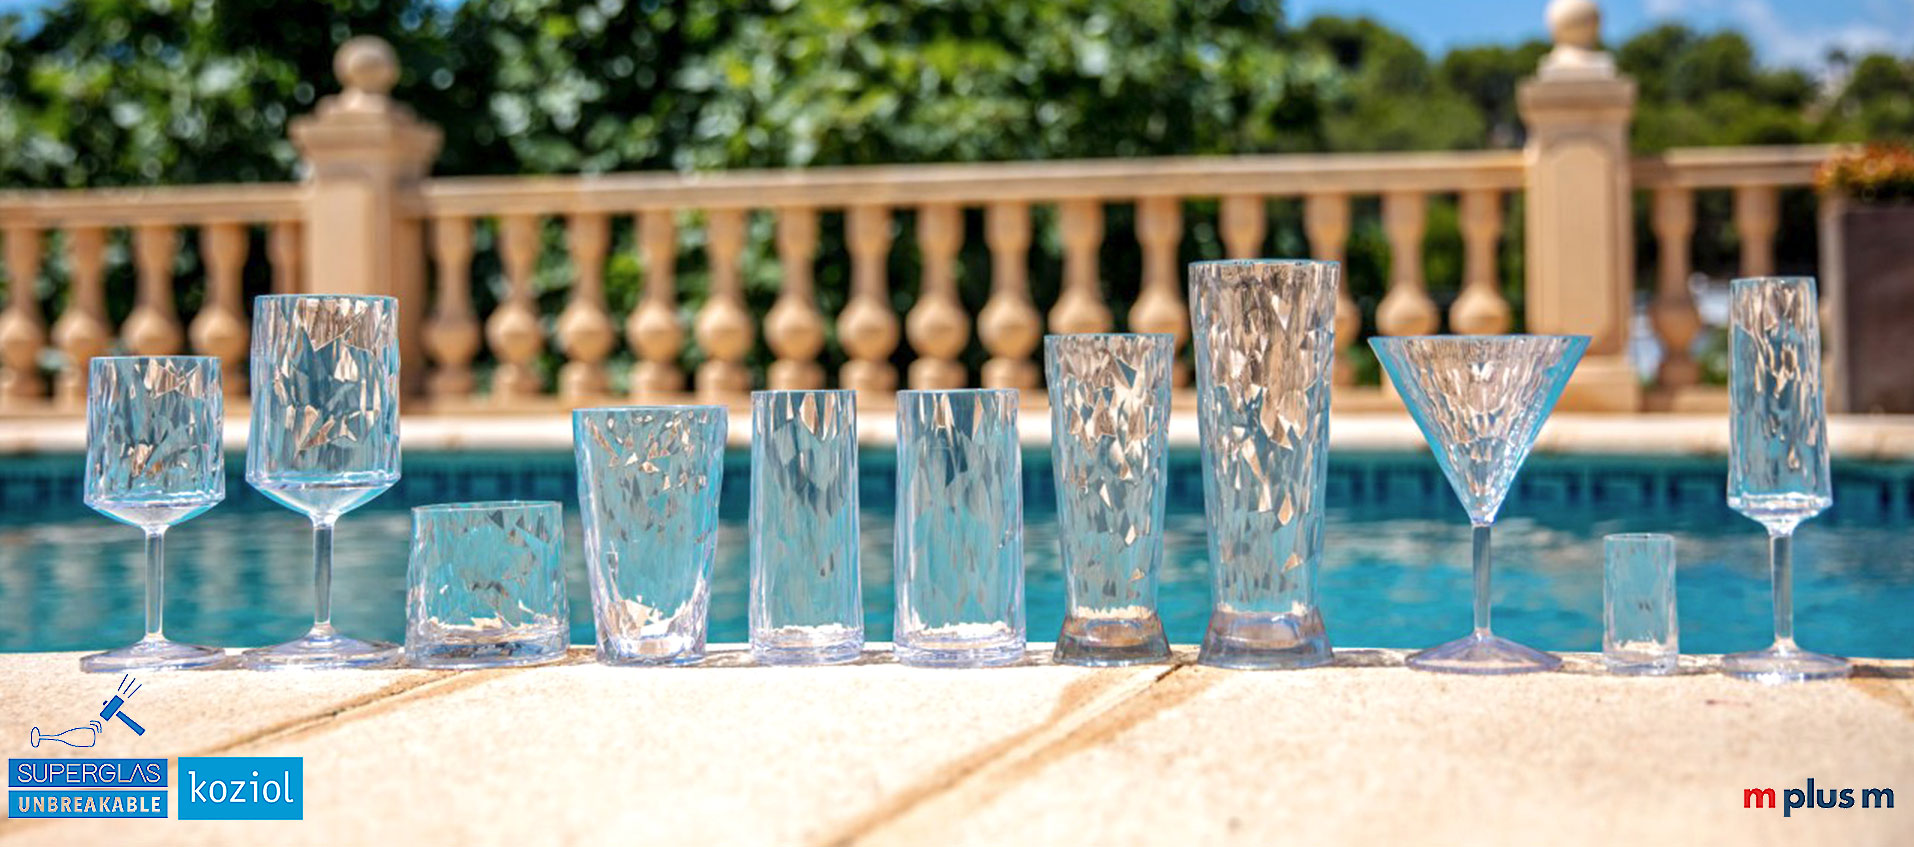 Koziol Superglas Gläser als Werbeartikel Made in Germany